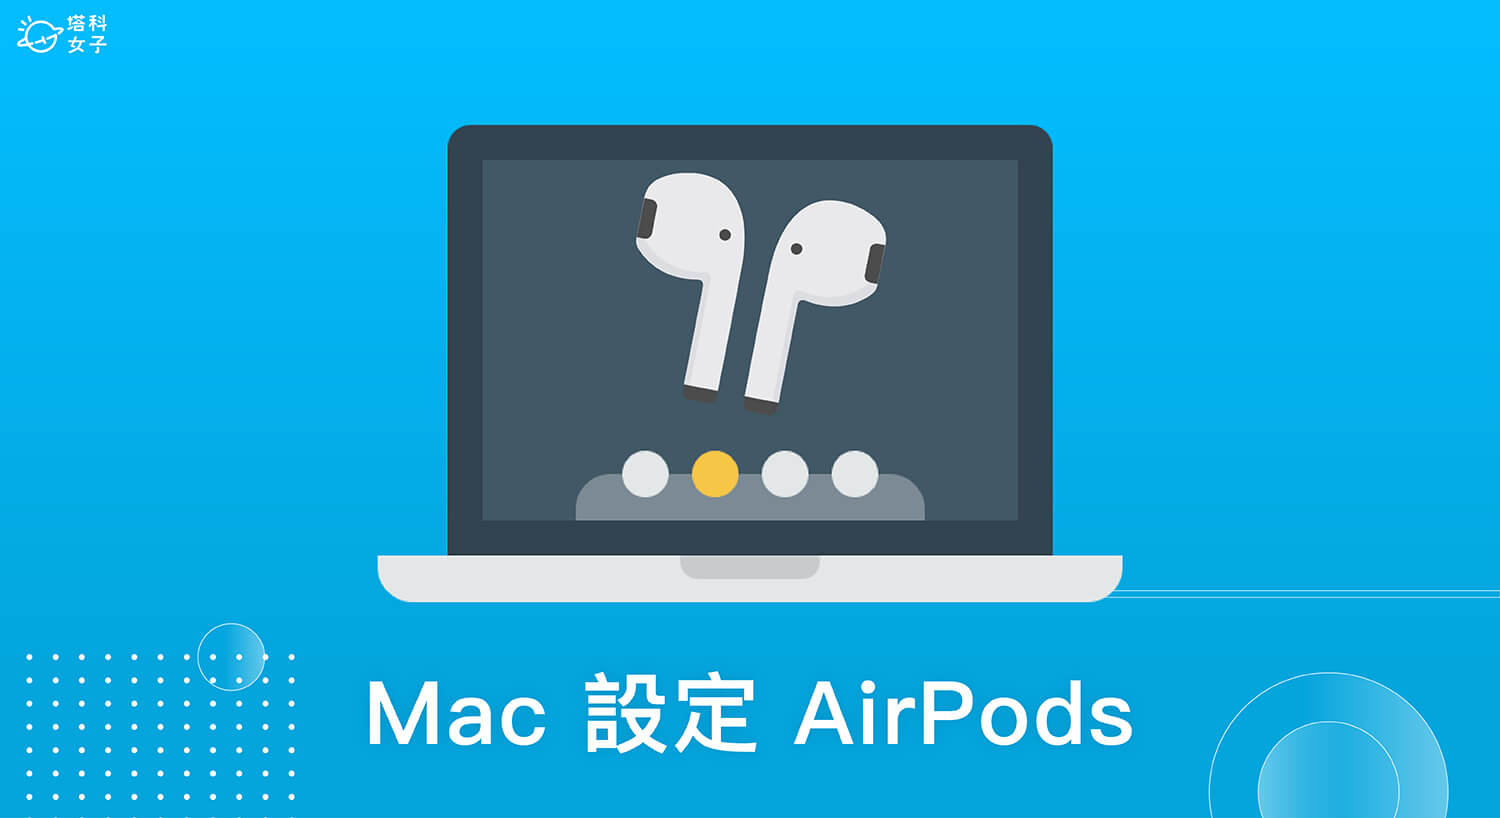 Mac 如何調整 AirPods 功能設定？macOS Ventura 支援更改 AirPods 設定